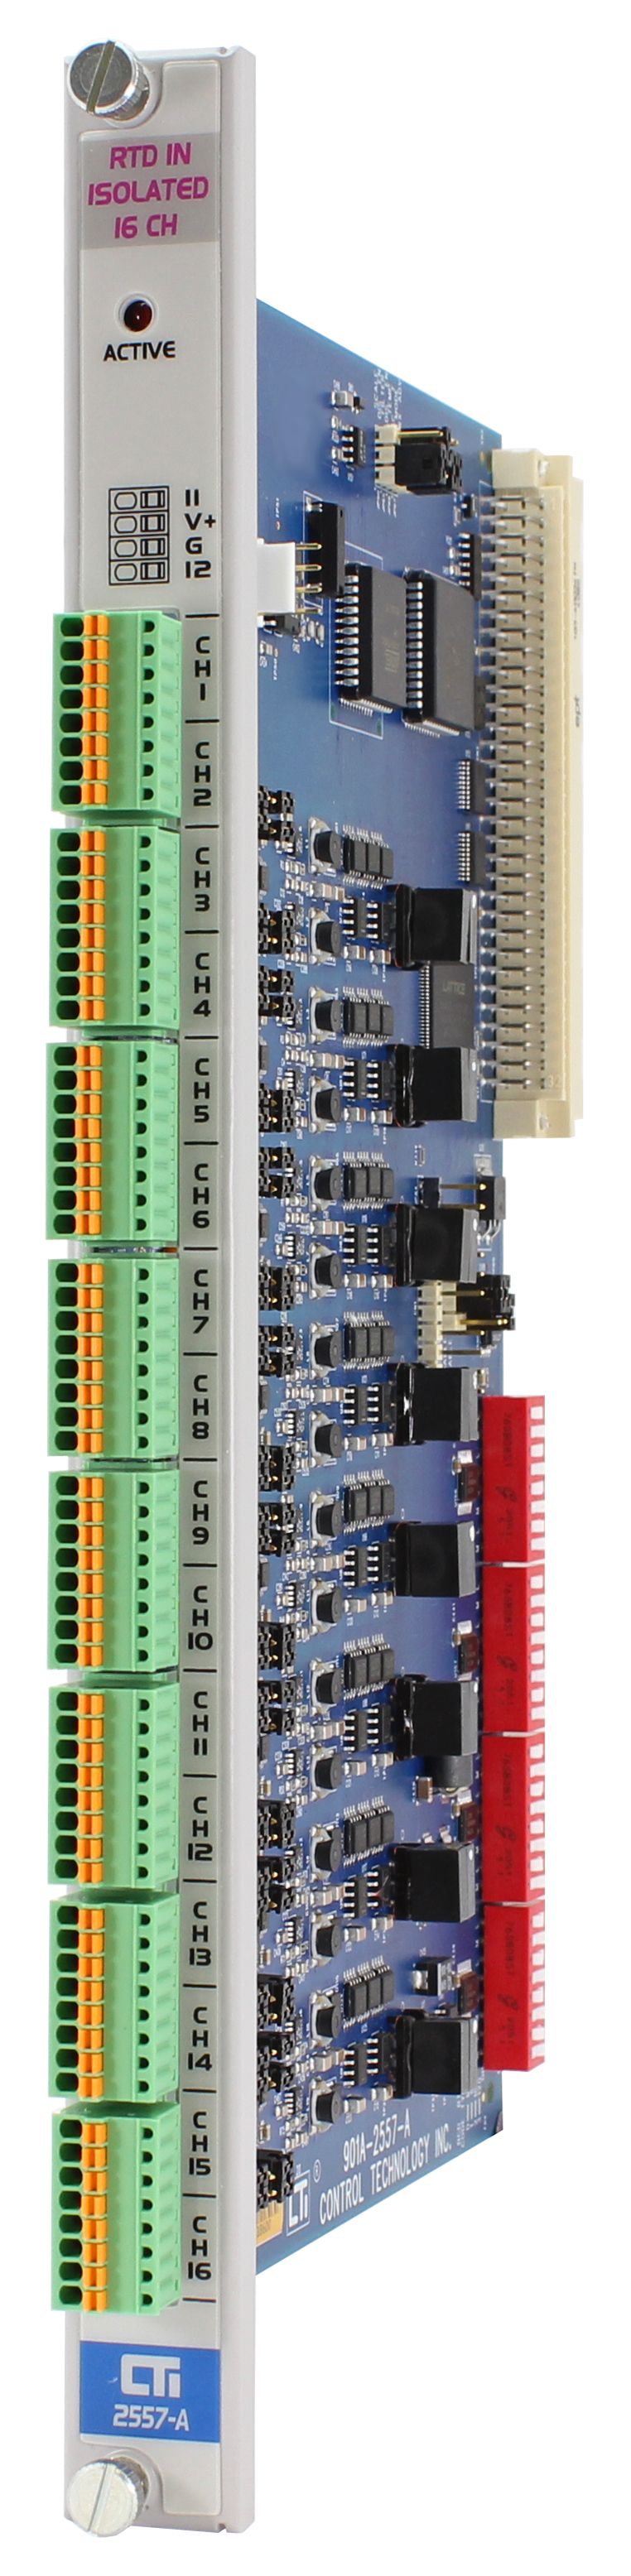 2557-A 16-Channel RTD Input Module